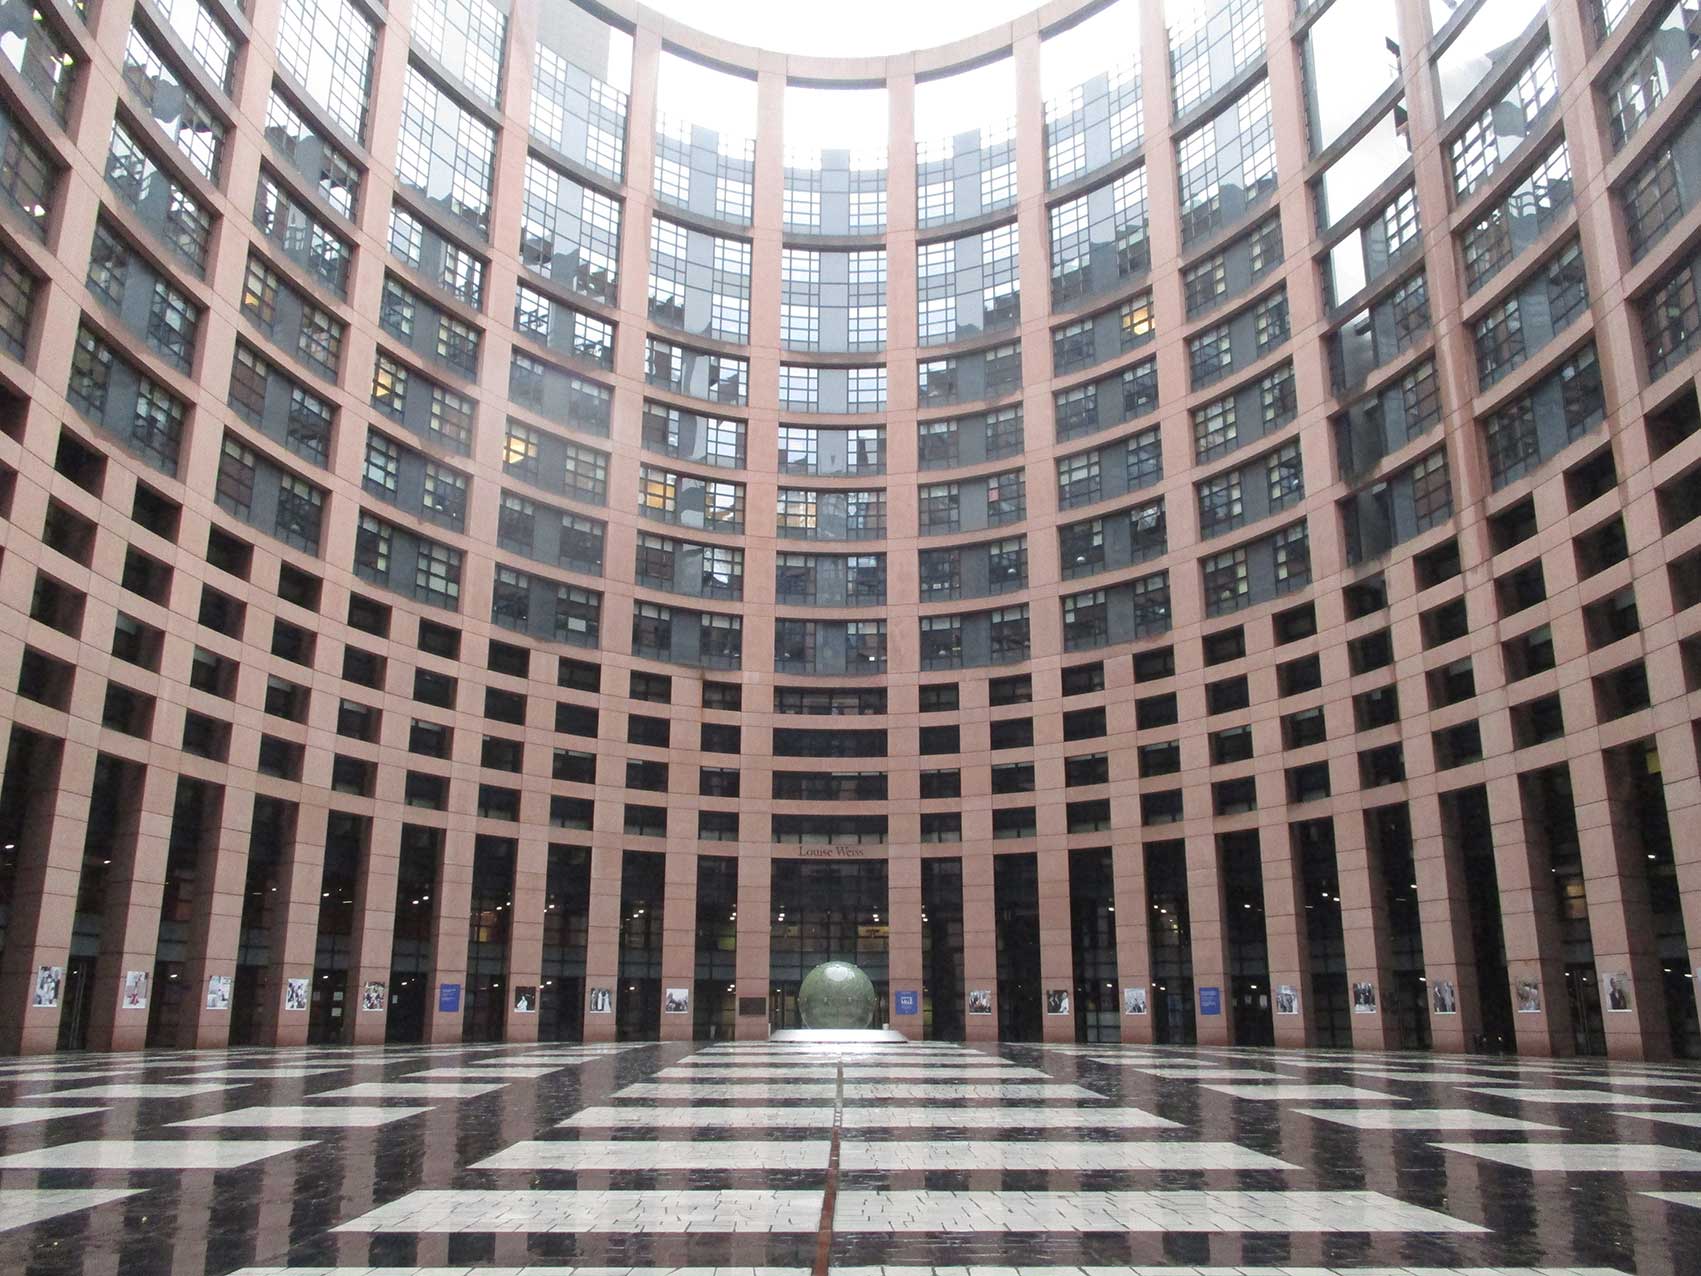 Parlement européen intérieur Strasbourg